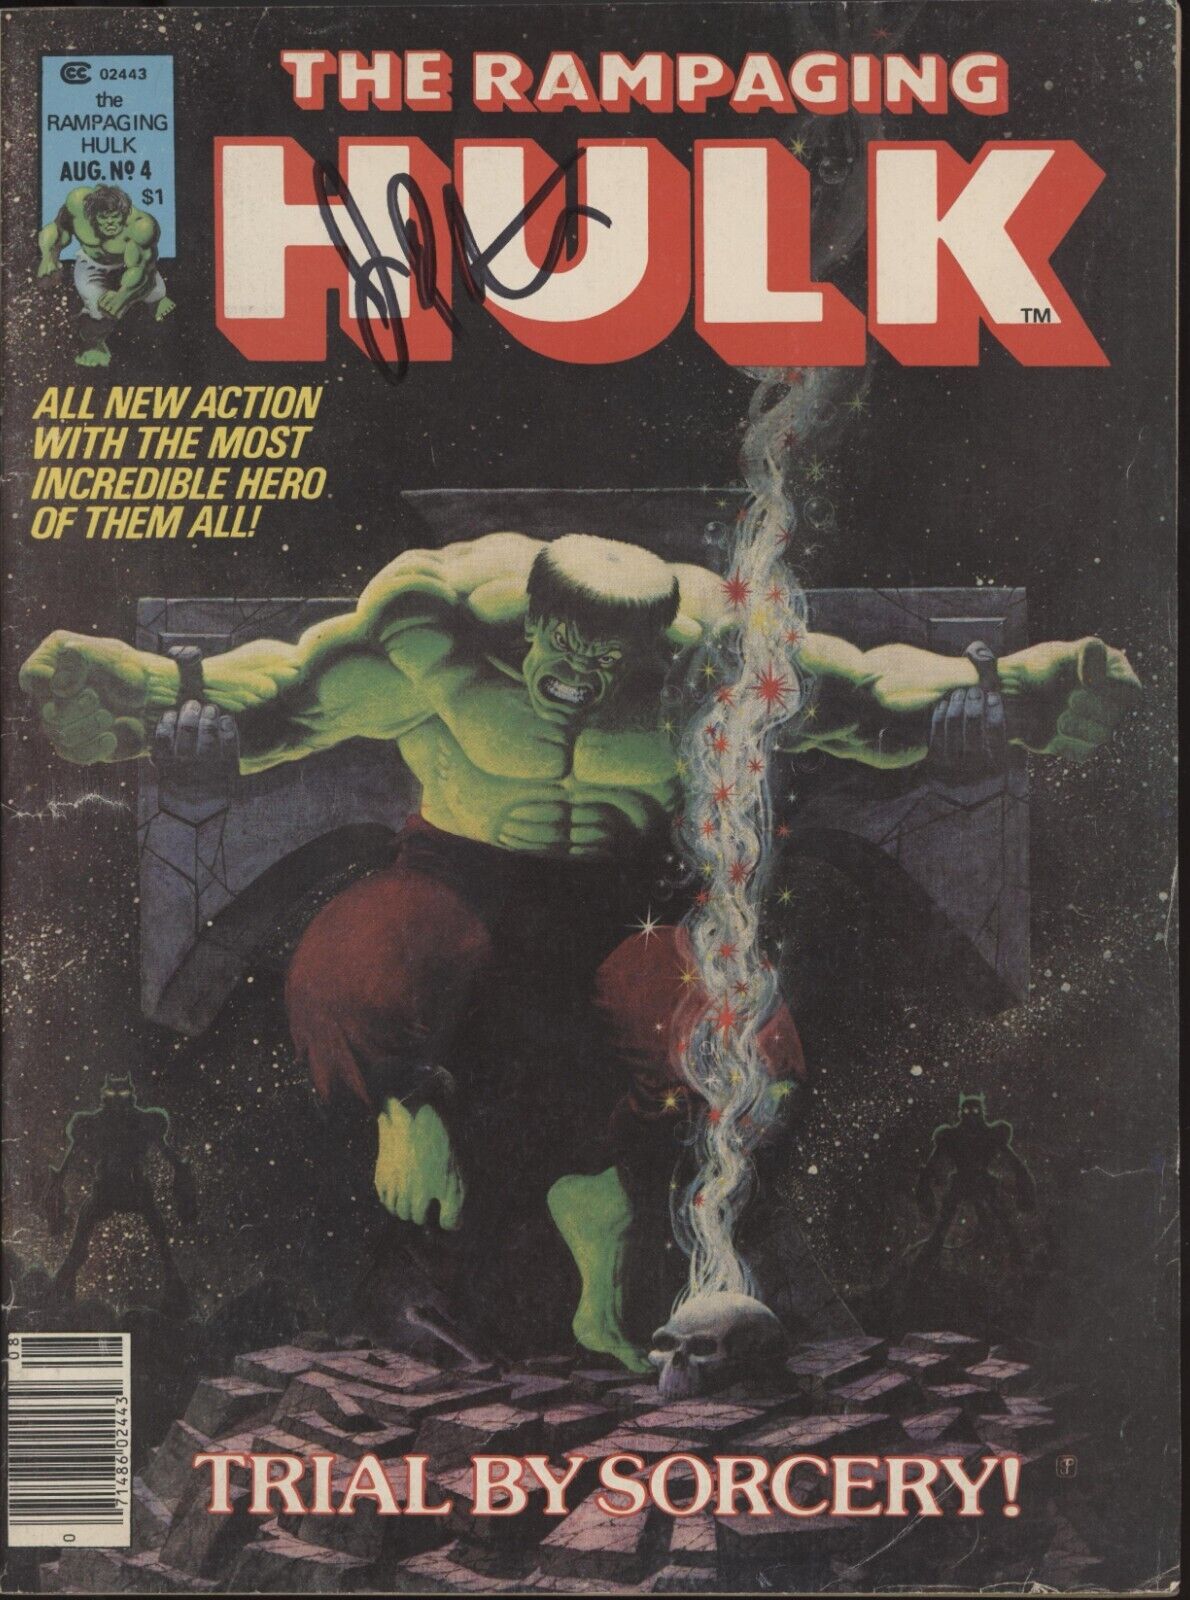 Rampaging Hulk Issue #4 Jim Starlin Personal Copy Auto with COA 2